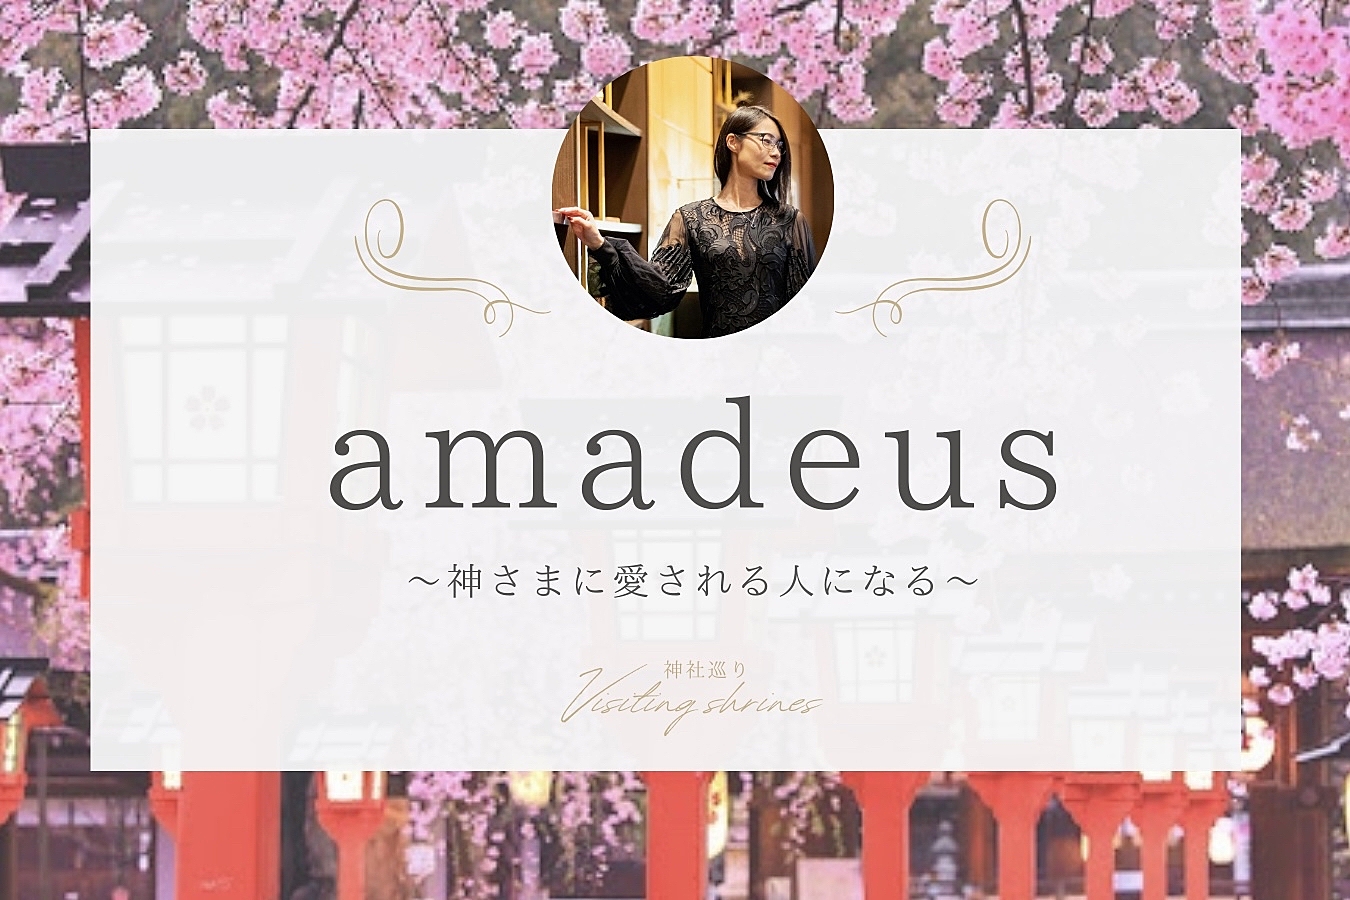 amadeus〜神社ツアー部門〜